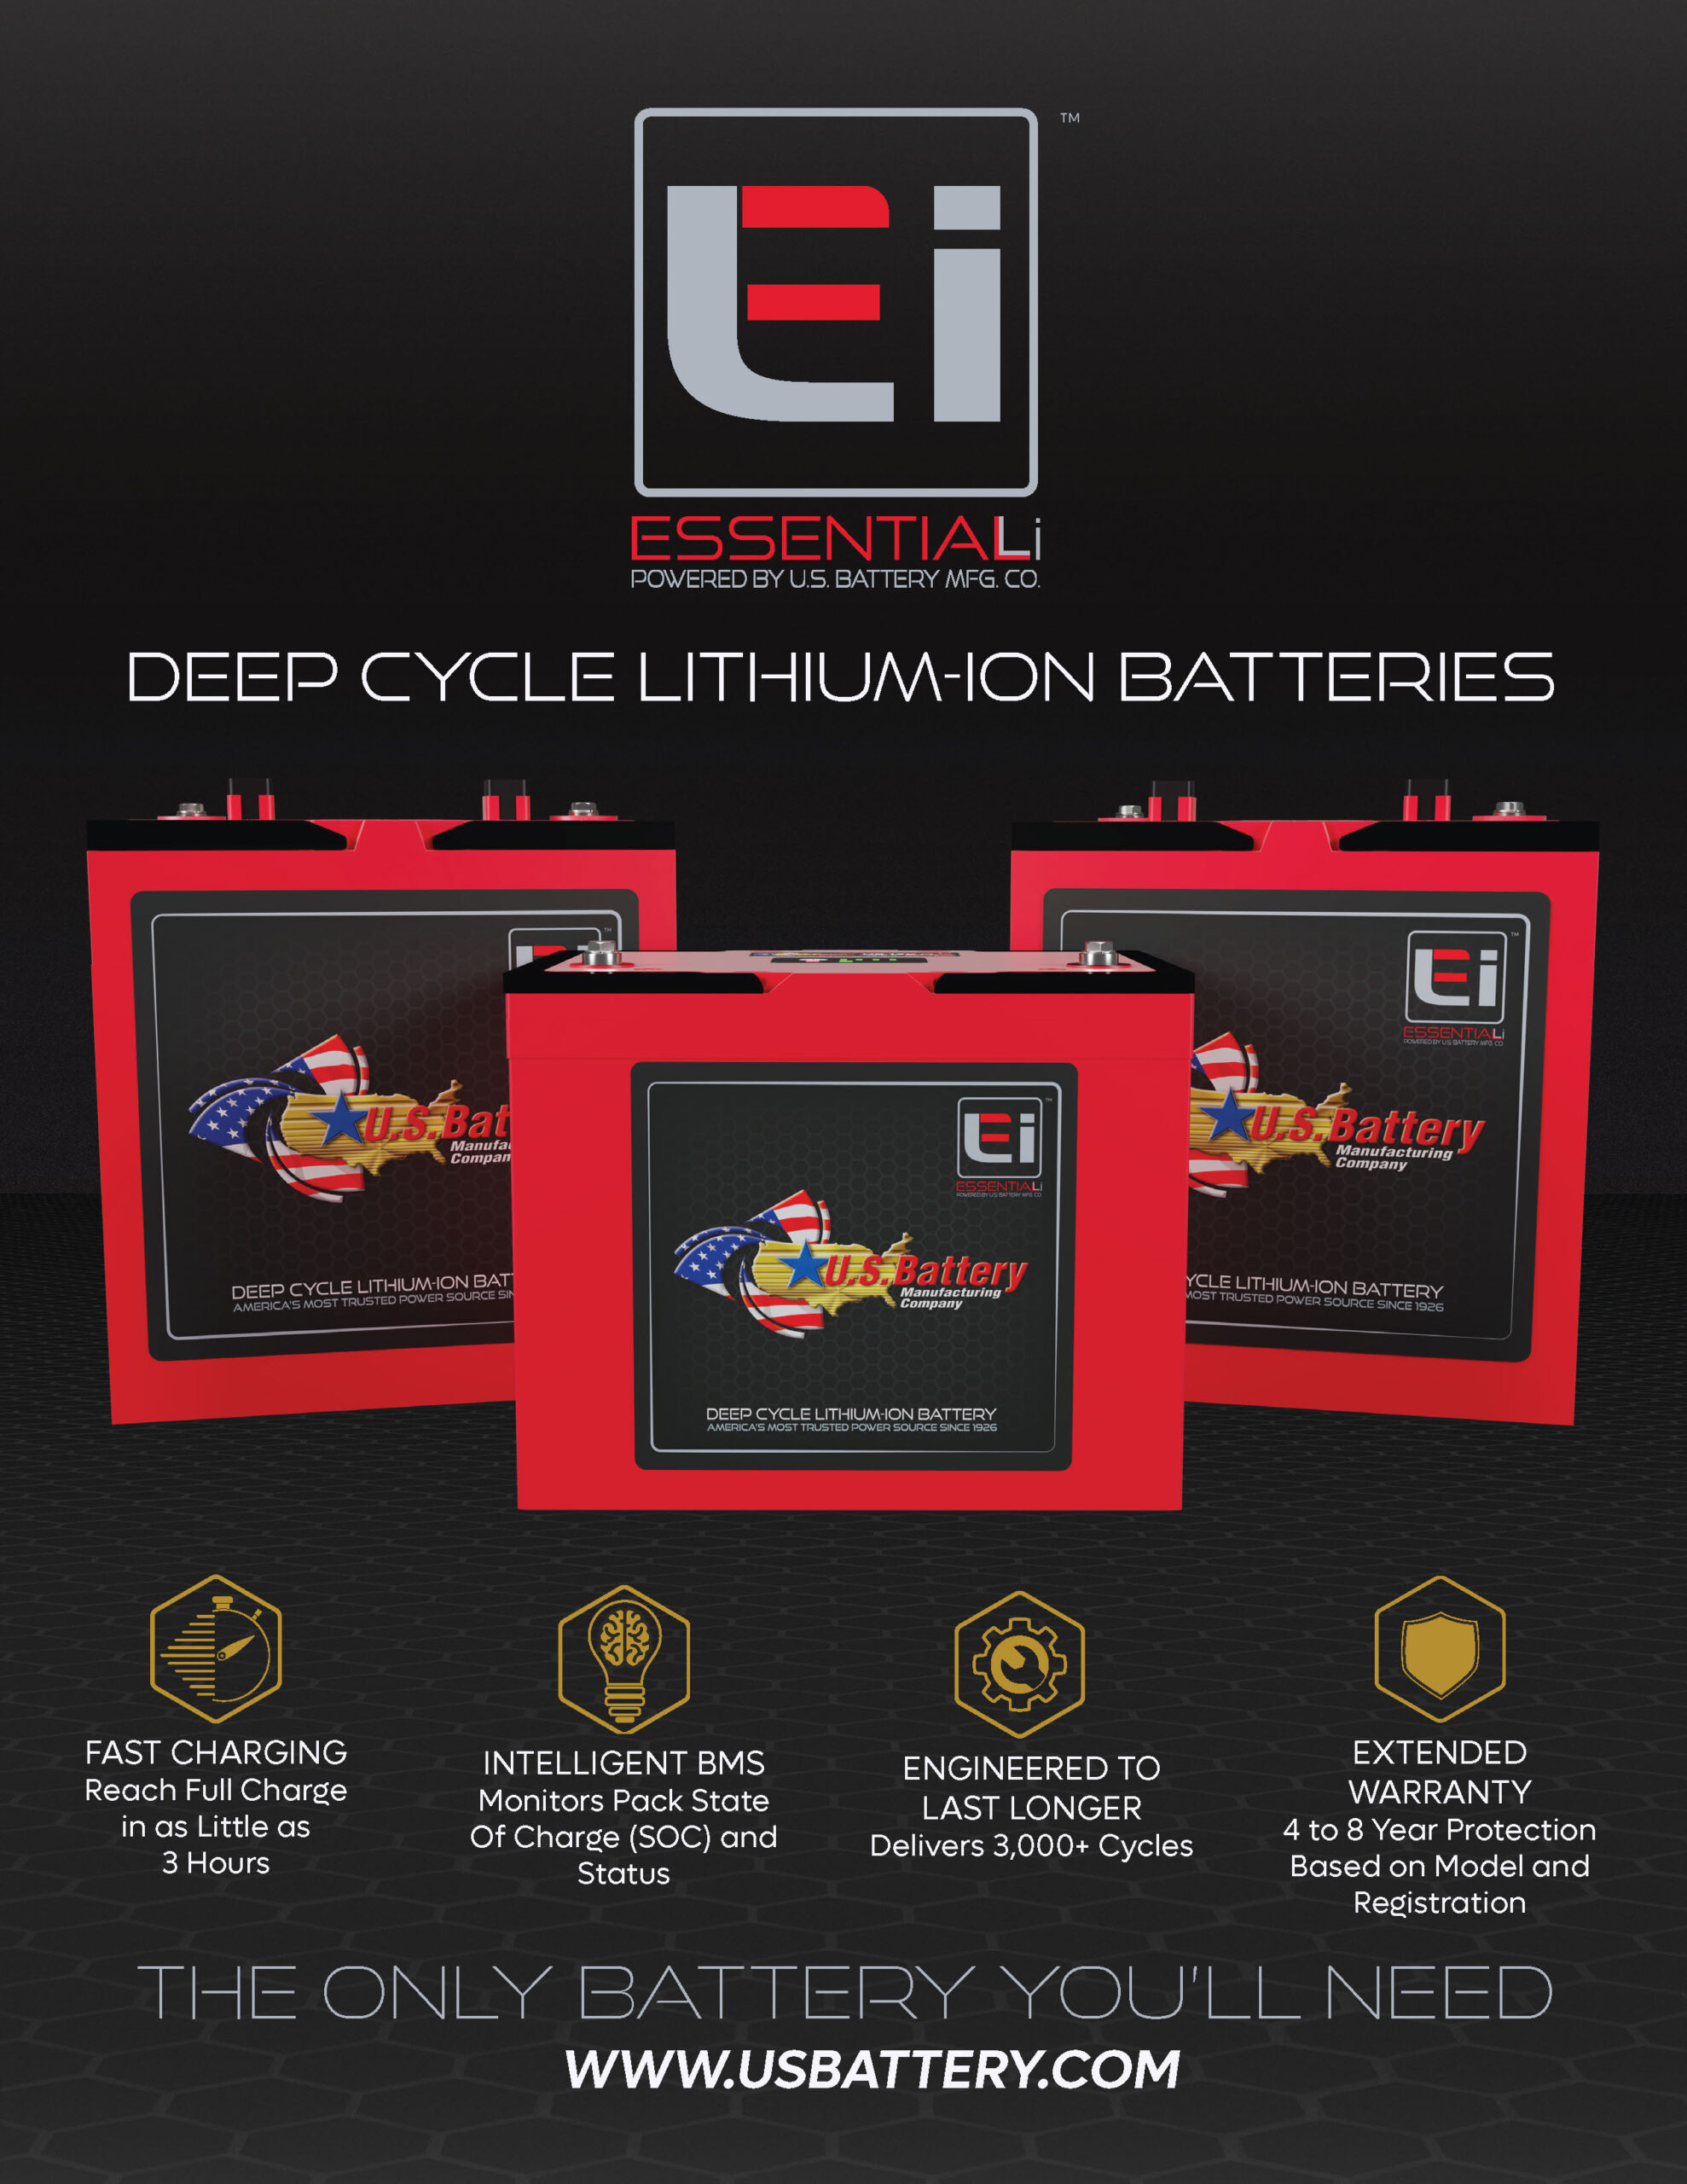 Essentisl Li® Battery line